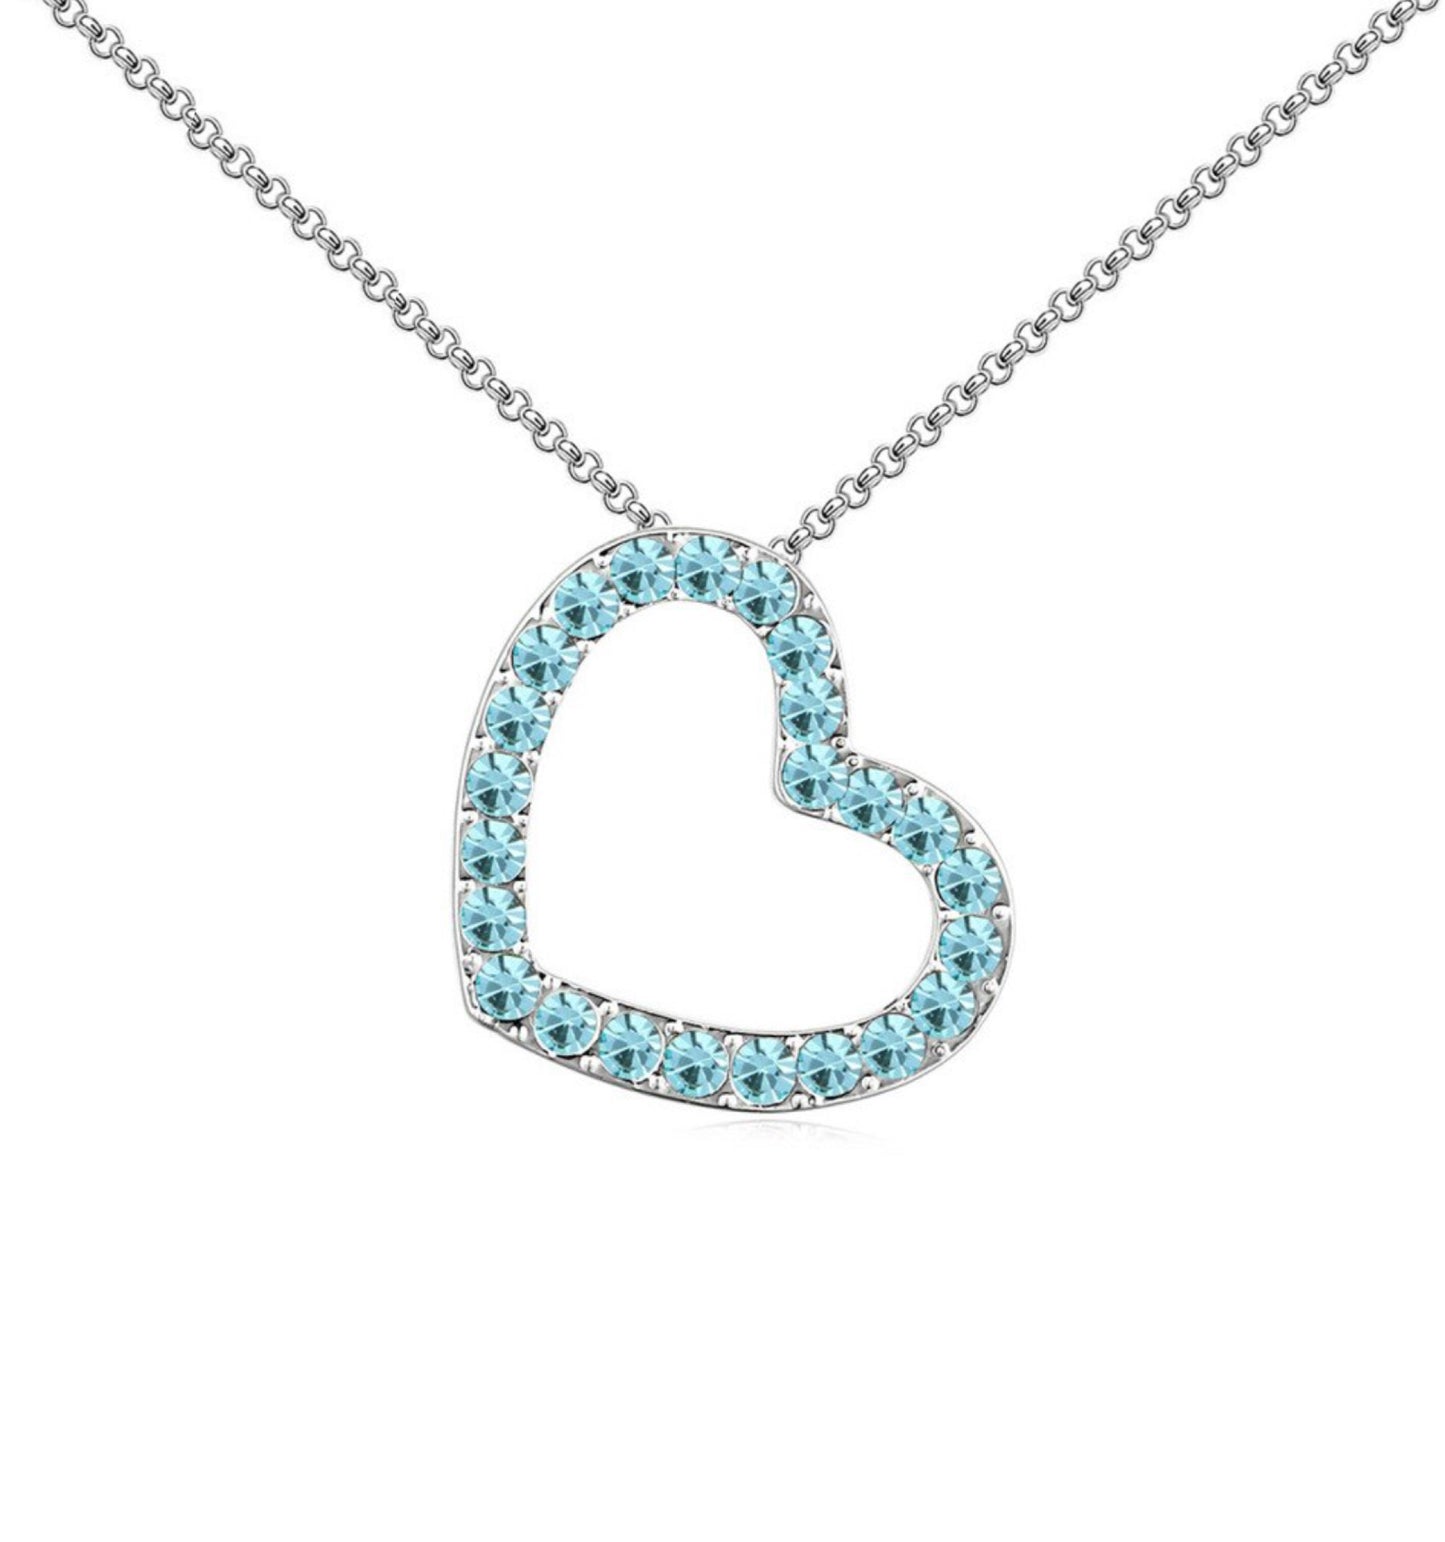 Aqua Swarovski Crystal Pave Heart Pendant Necklace